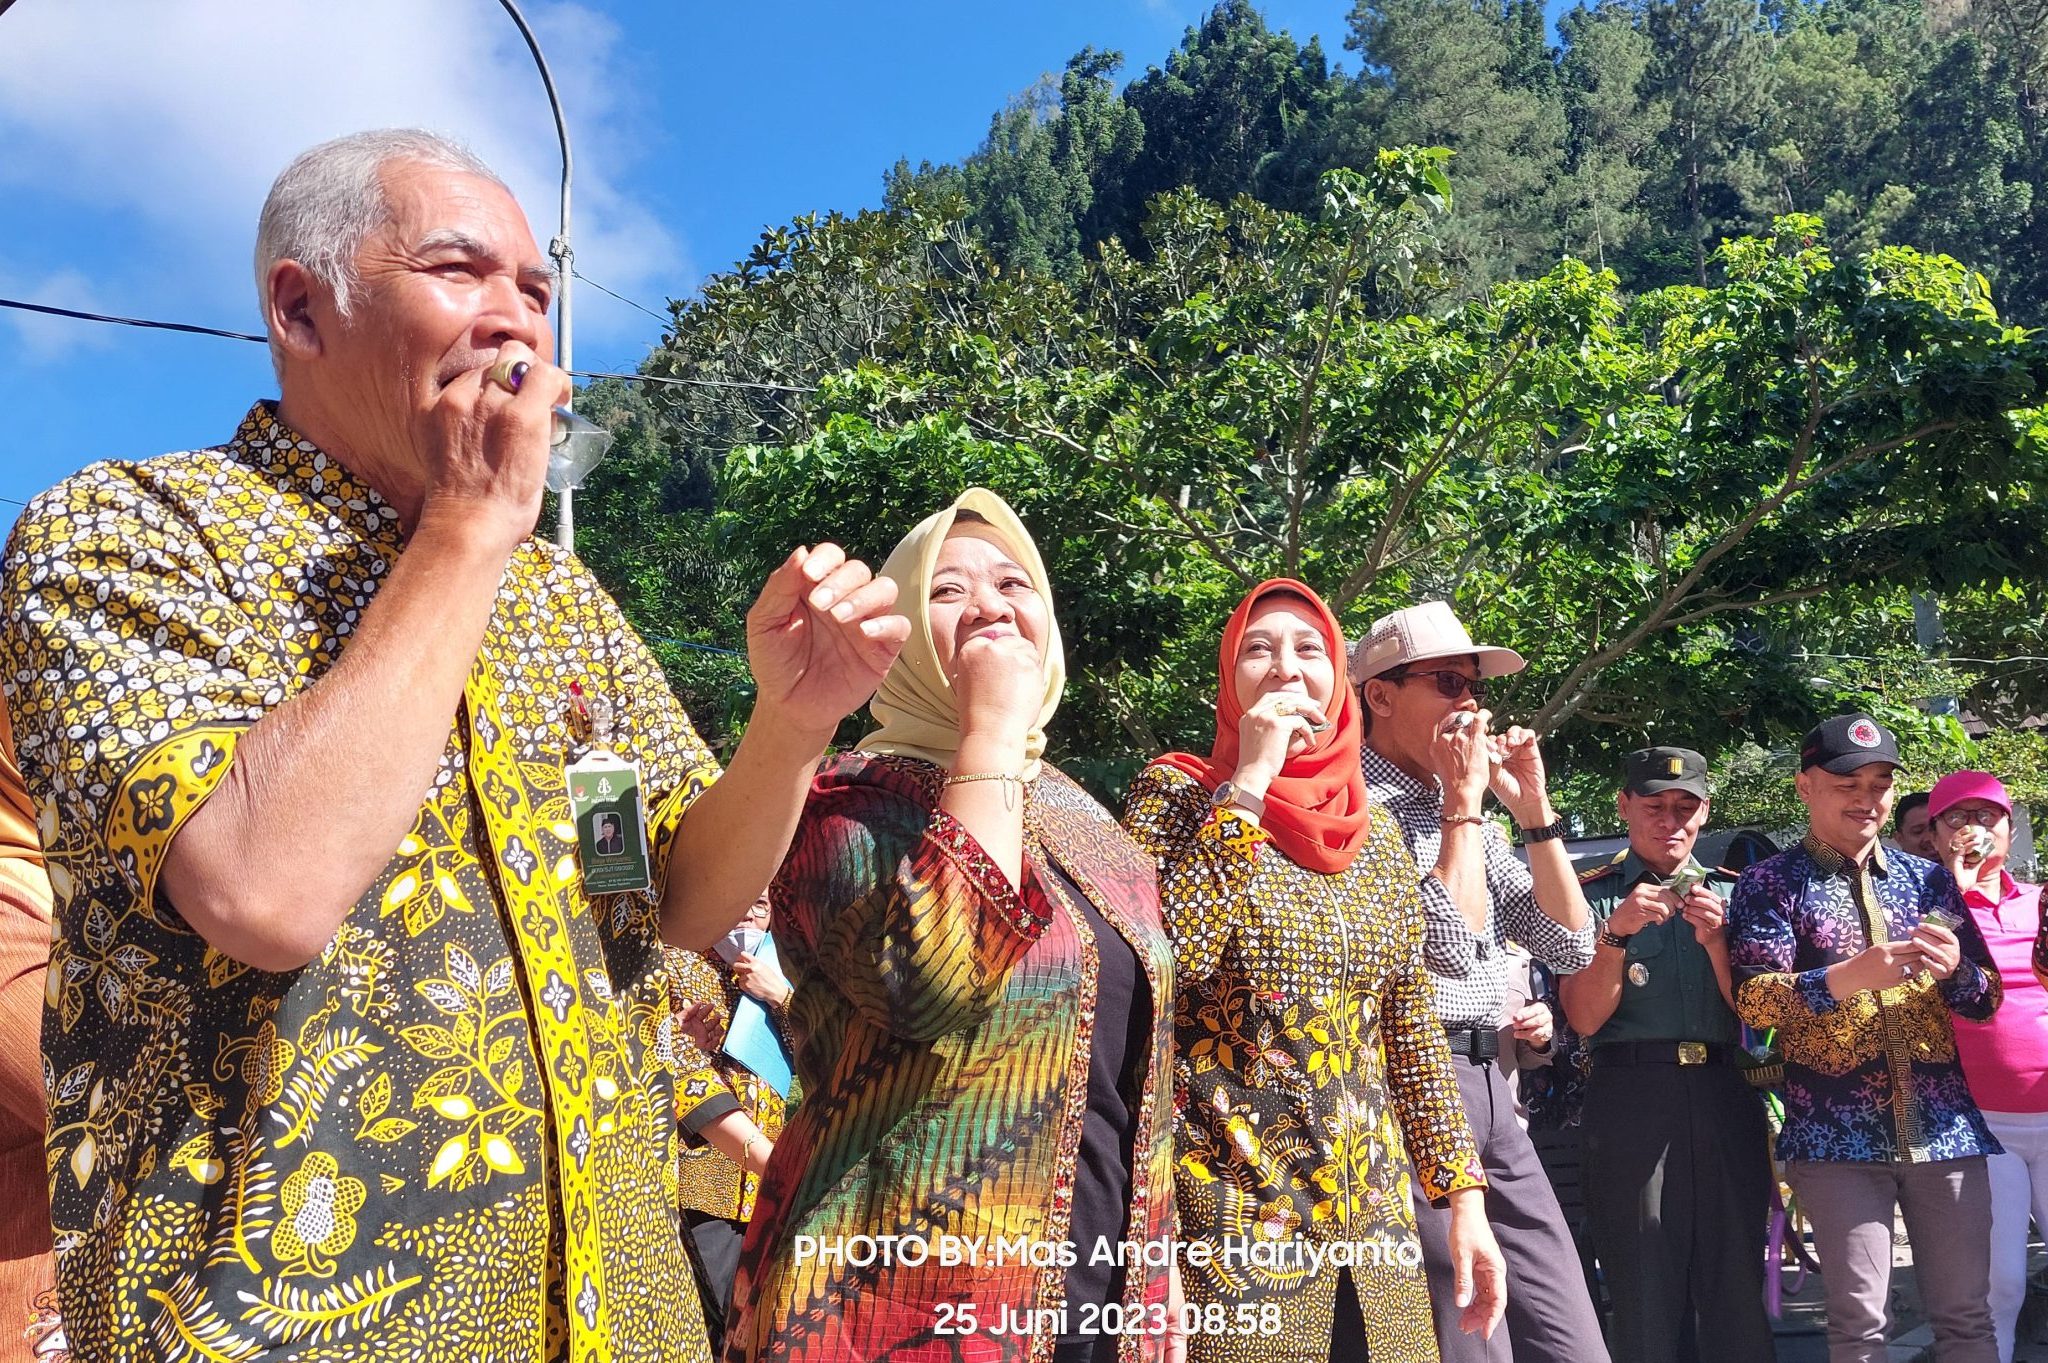 Grand Launching Rumah Promosi dan Wisata Edukasi Sentra Jadah Tempe Yogyakarta. Foto: Mas Andre Hariyanto (SUARA UTAMA)